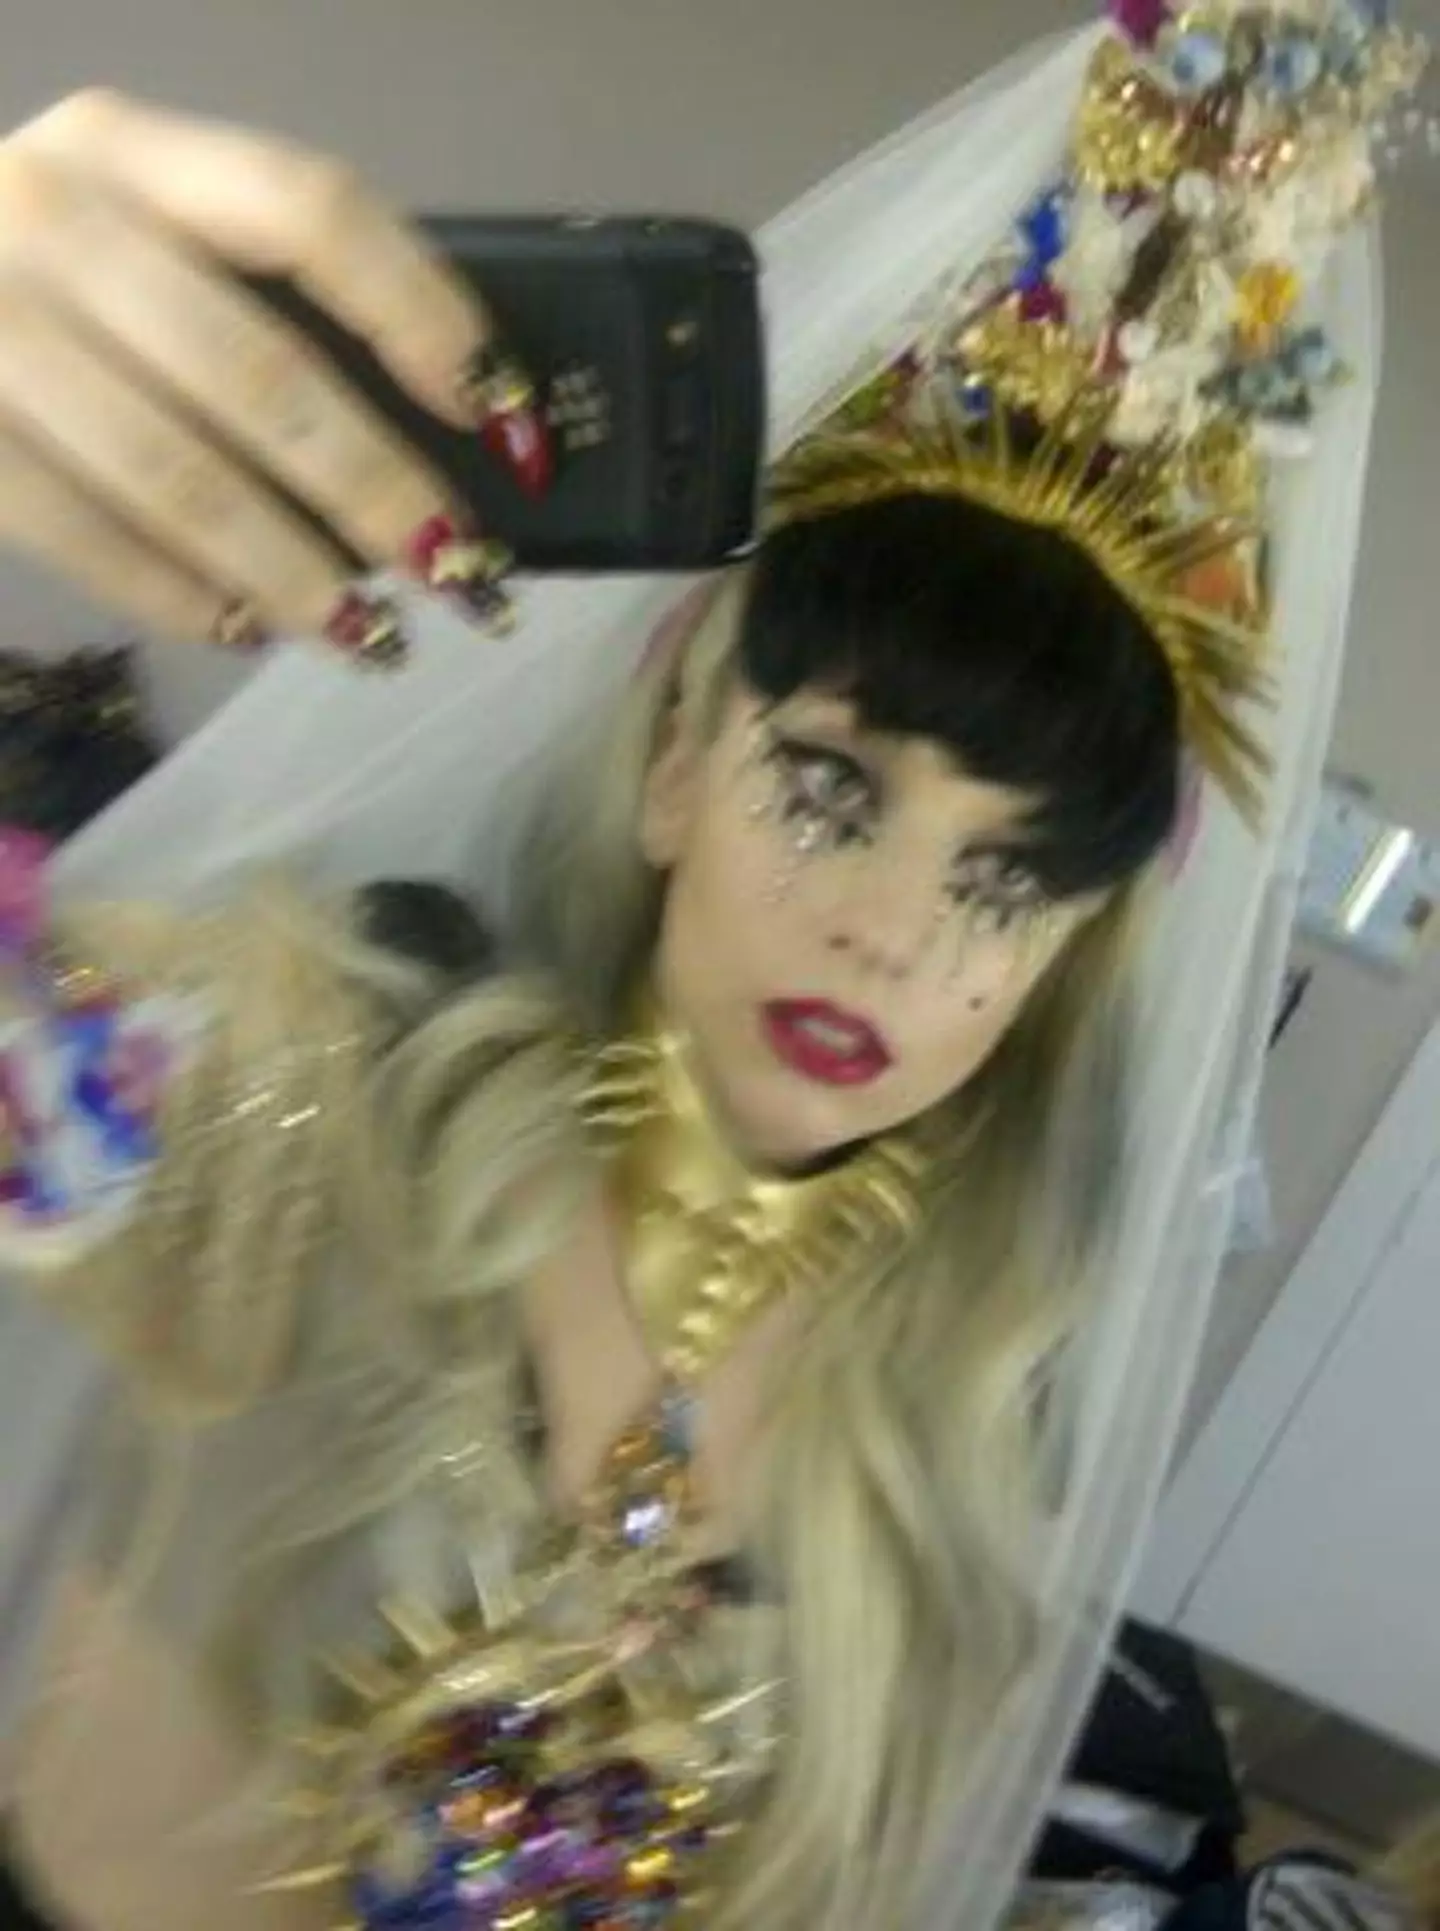 Lady Gaga was no stranger to a BlackBerry mirror selfie (